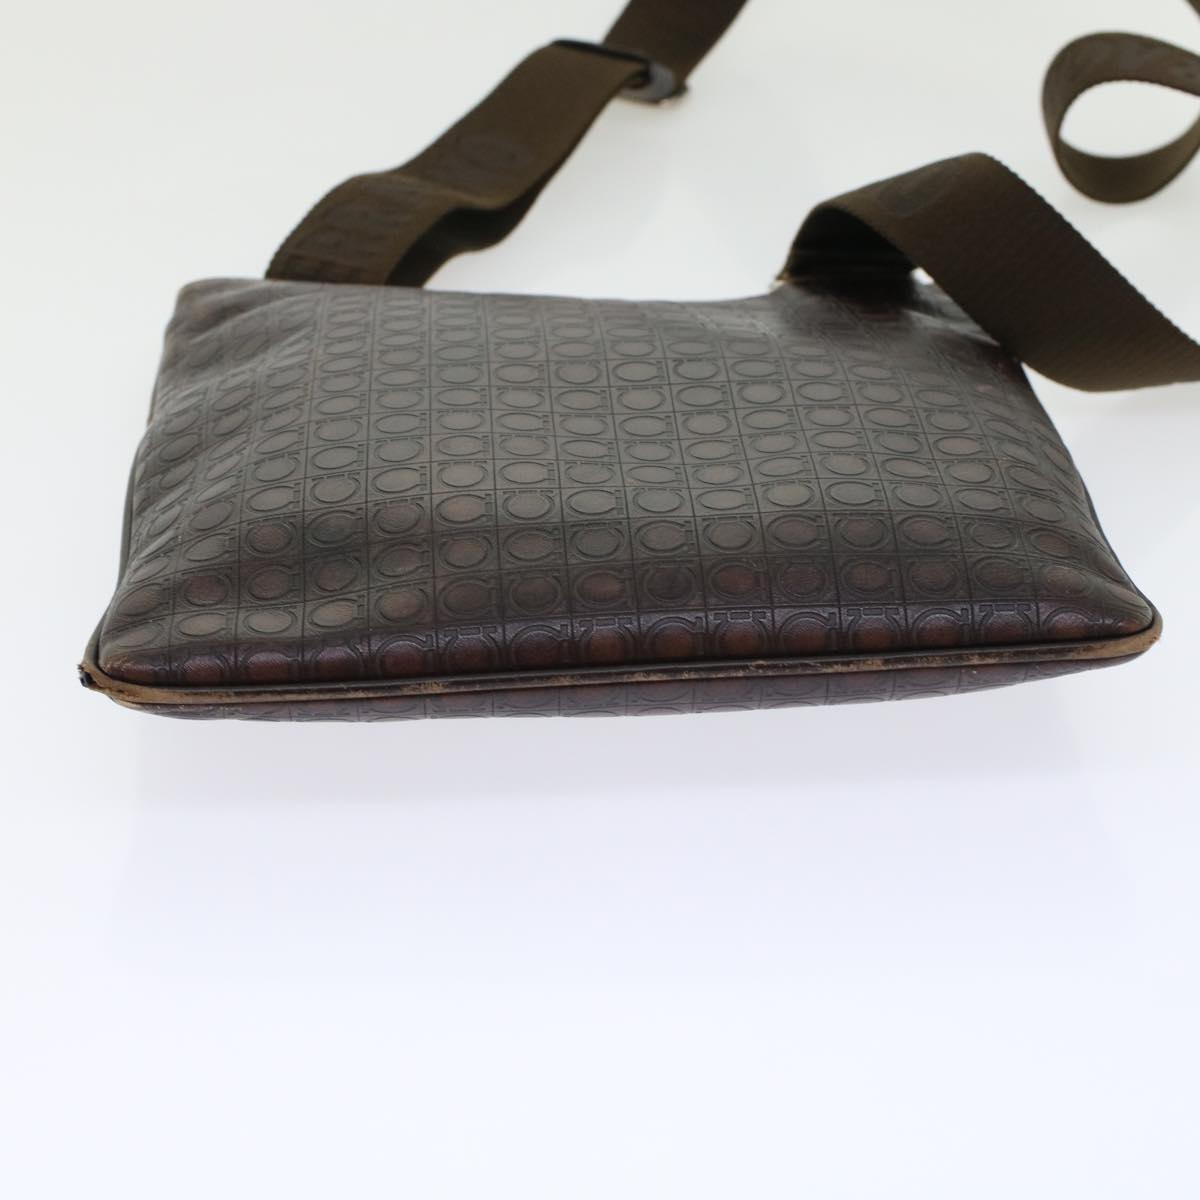 Salvatore Ferragamo Shoulder Hand Bag Leather 2Set Brown Beige Auth bs6270